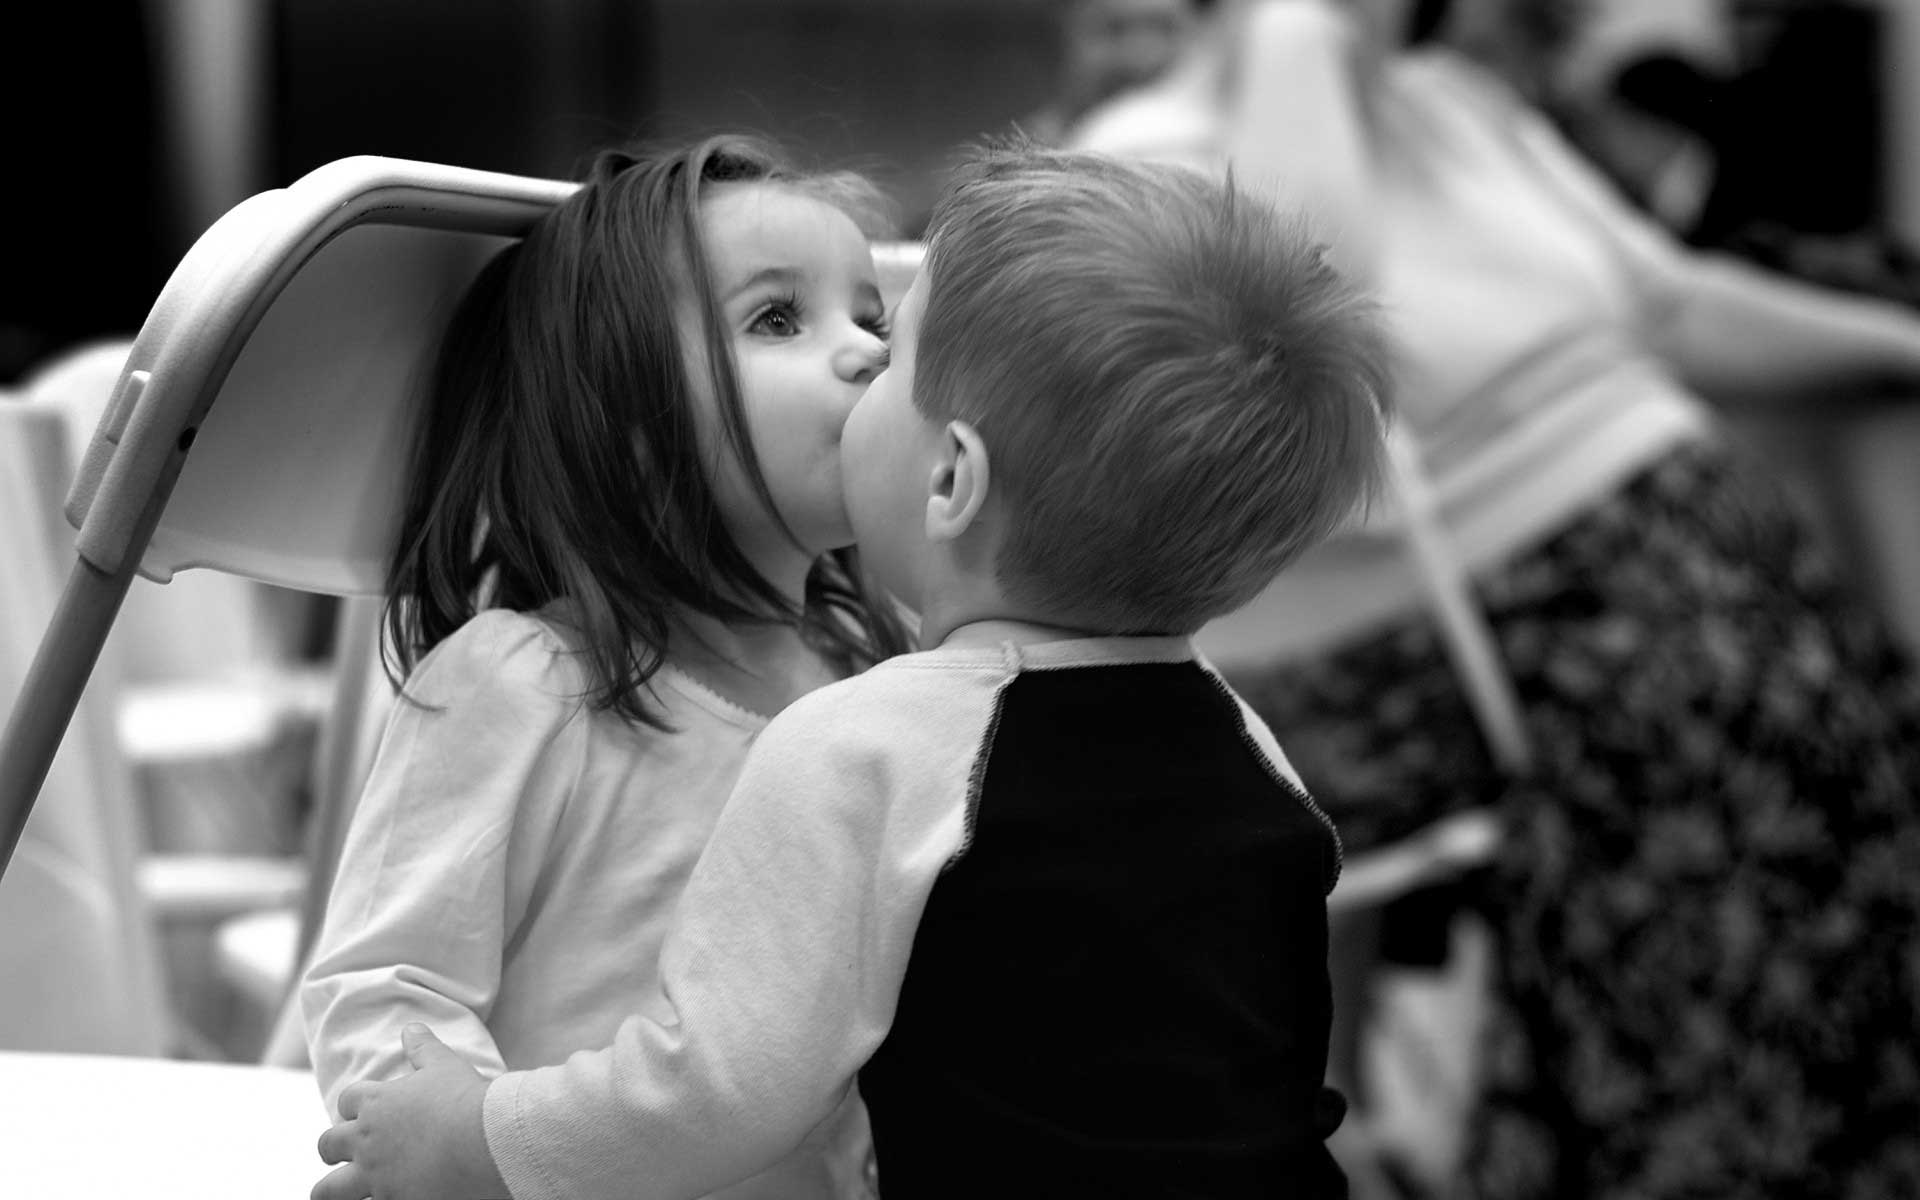 Cutest Children Love kissing images